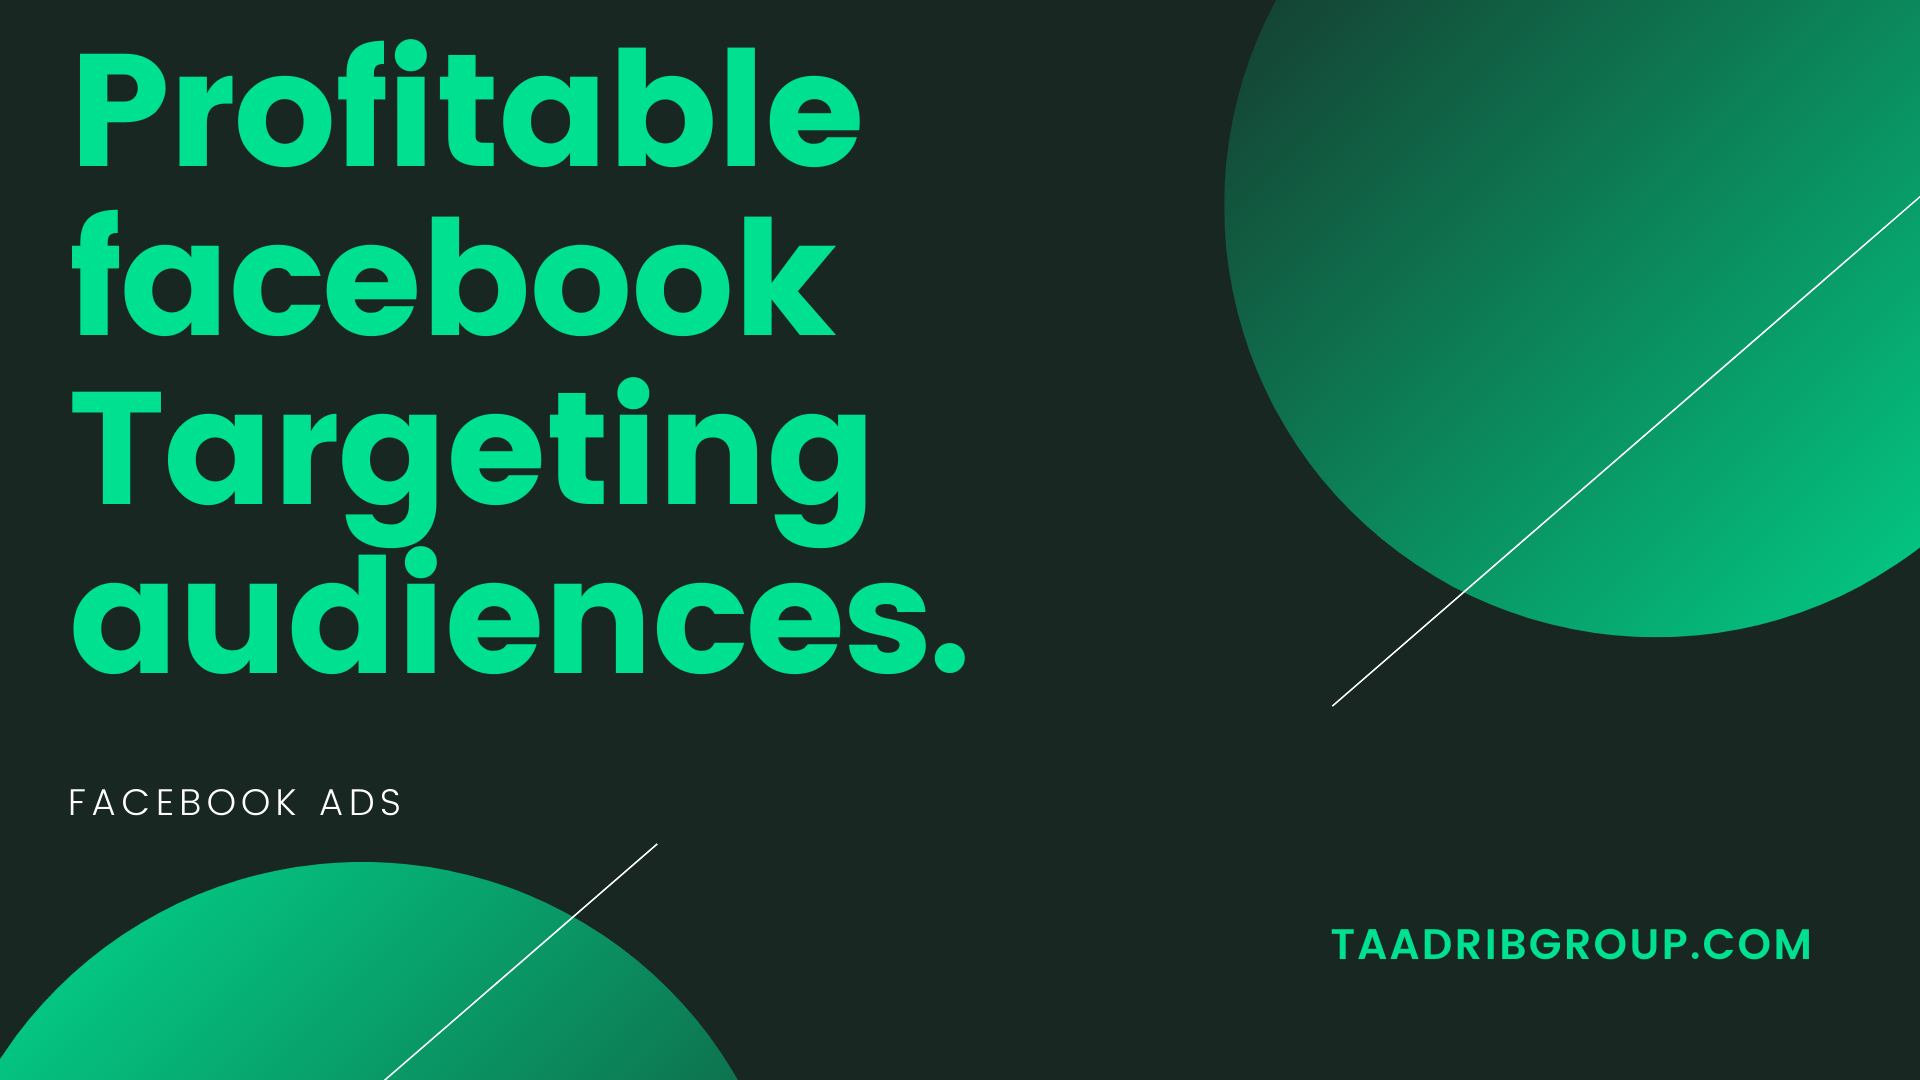 Targeting-audiences-on-facebookk